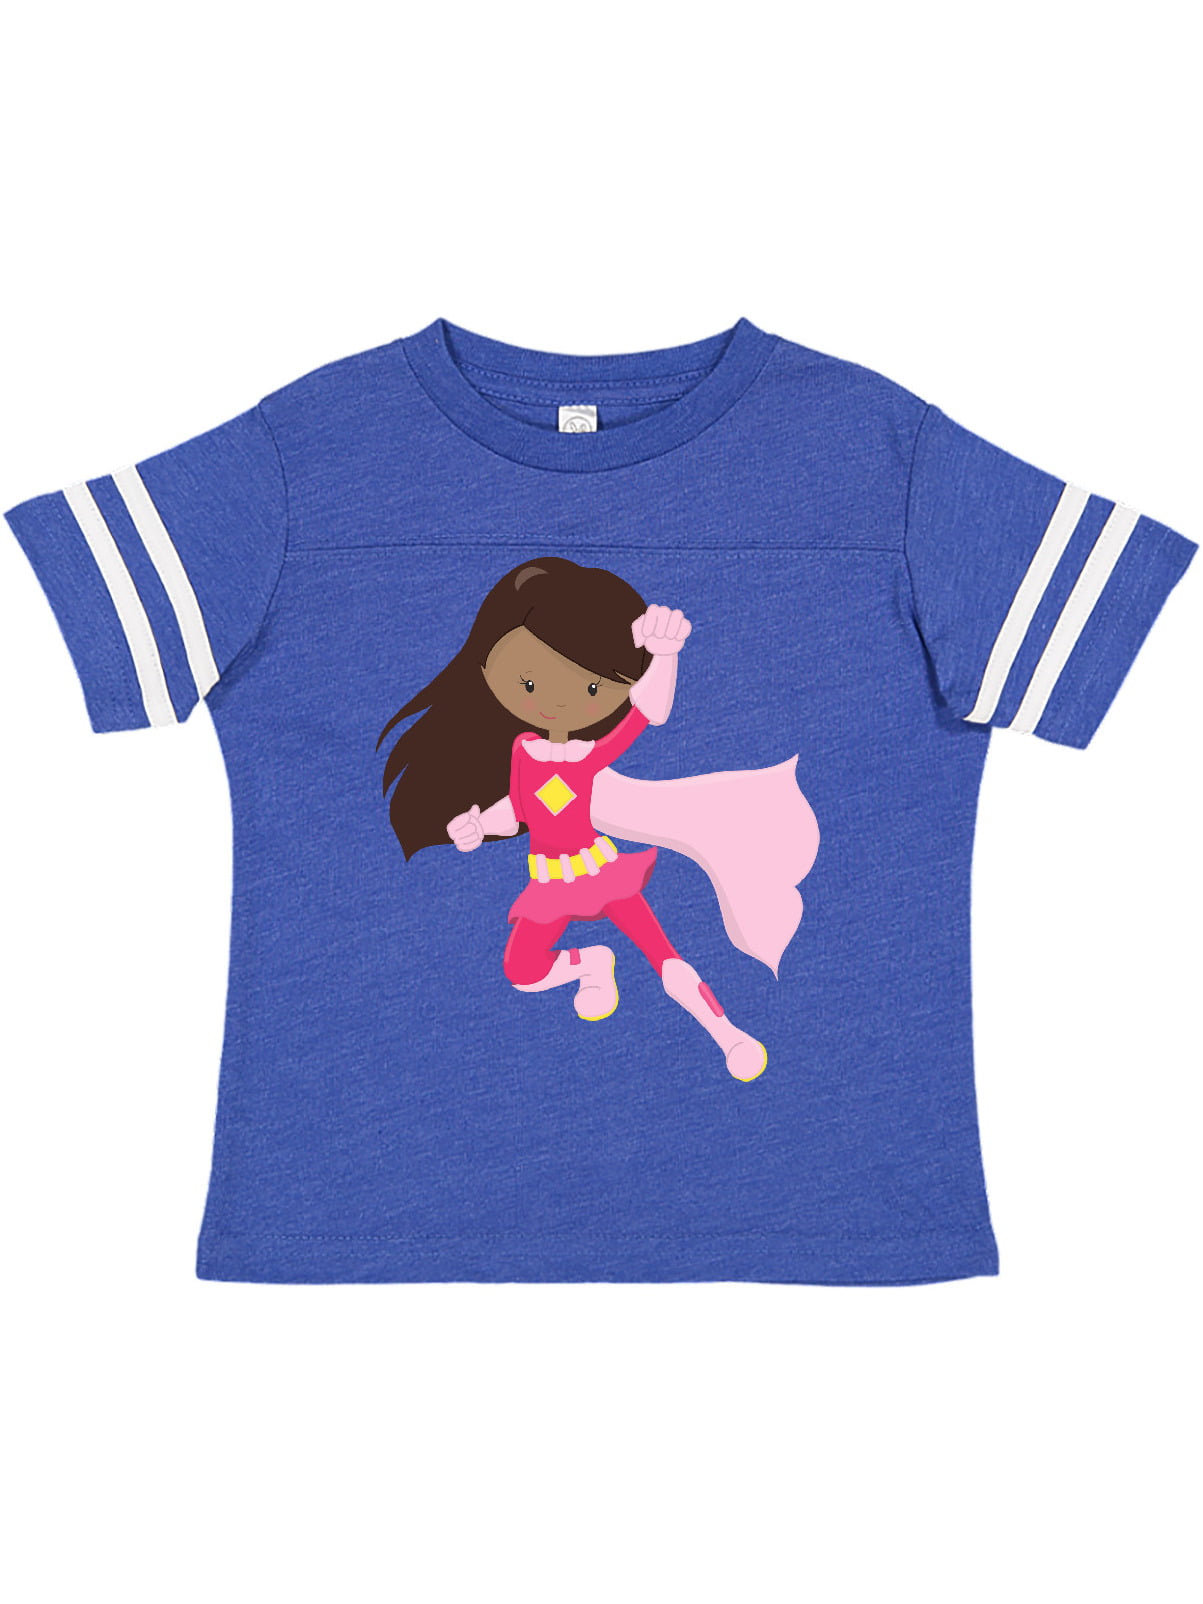 superhero shirt toddler girl